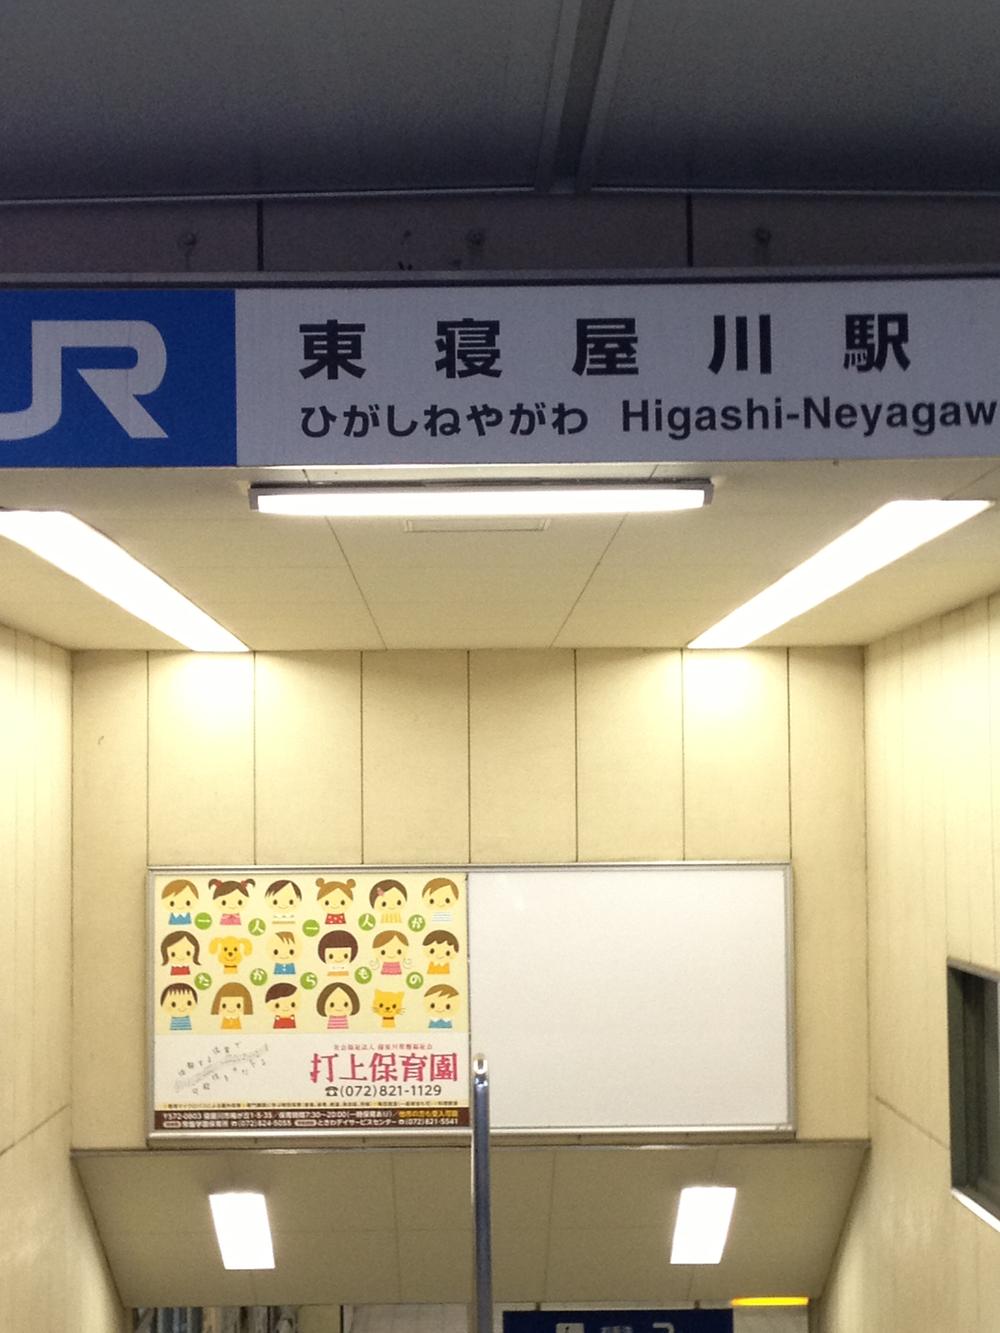 station. Higashi-Neyagawa Station